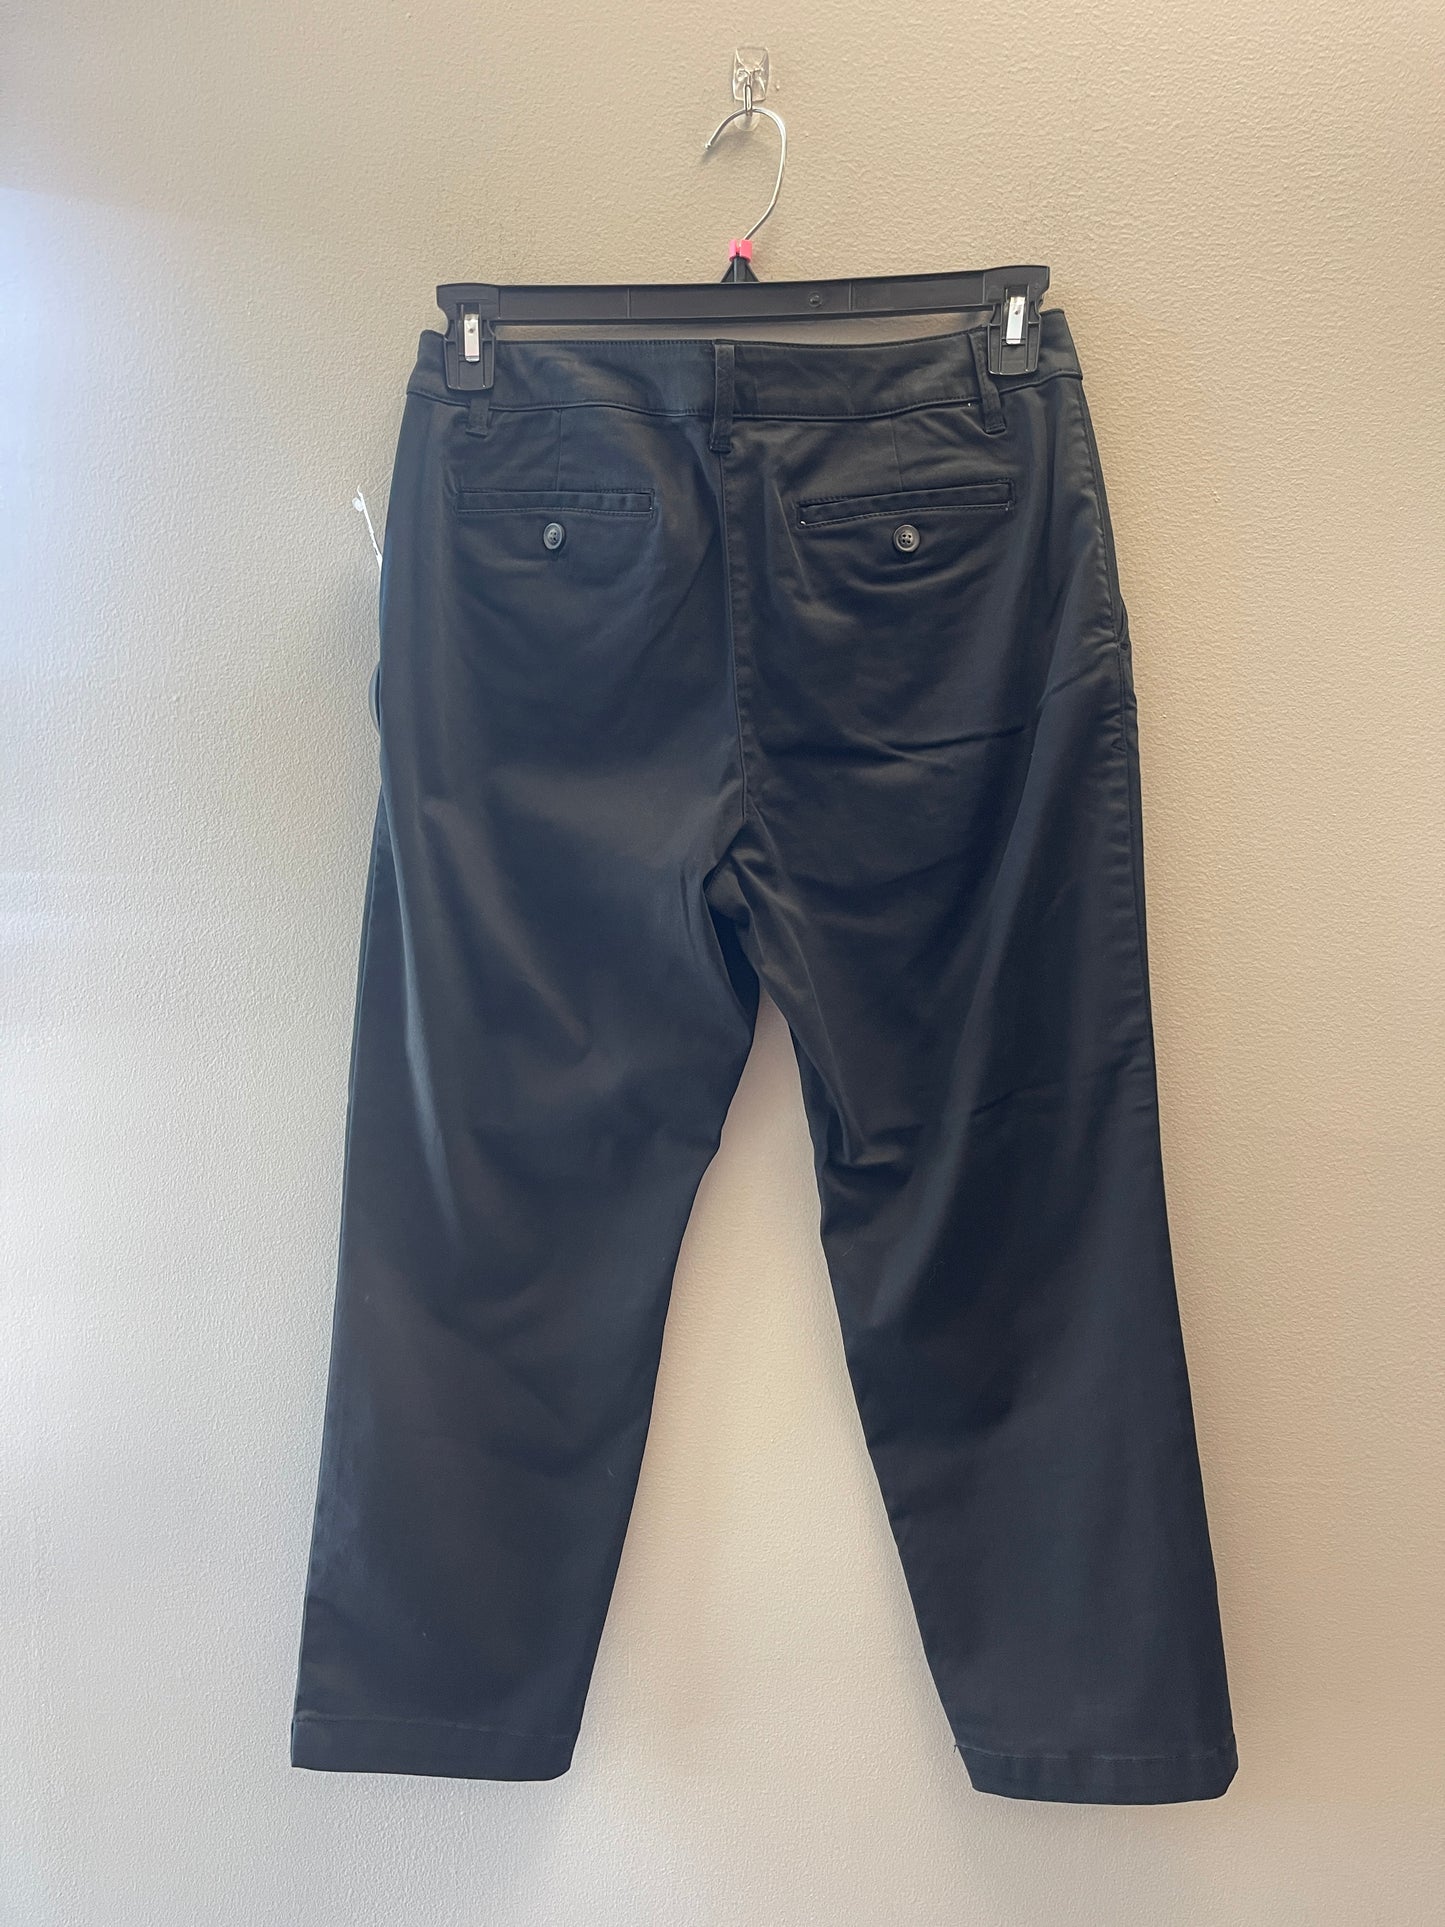 Pants Designer By Tommy Bahama  Size: 6